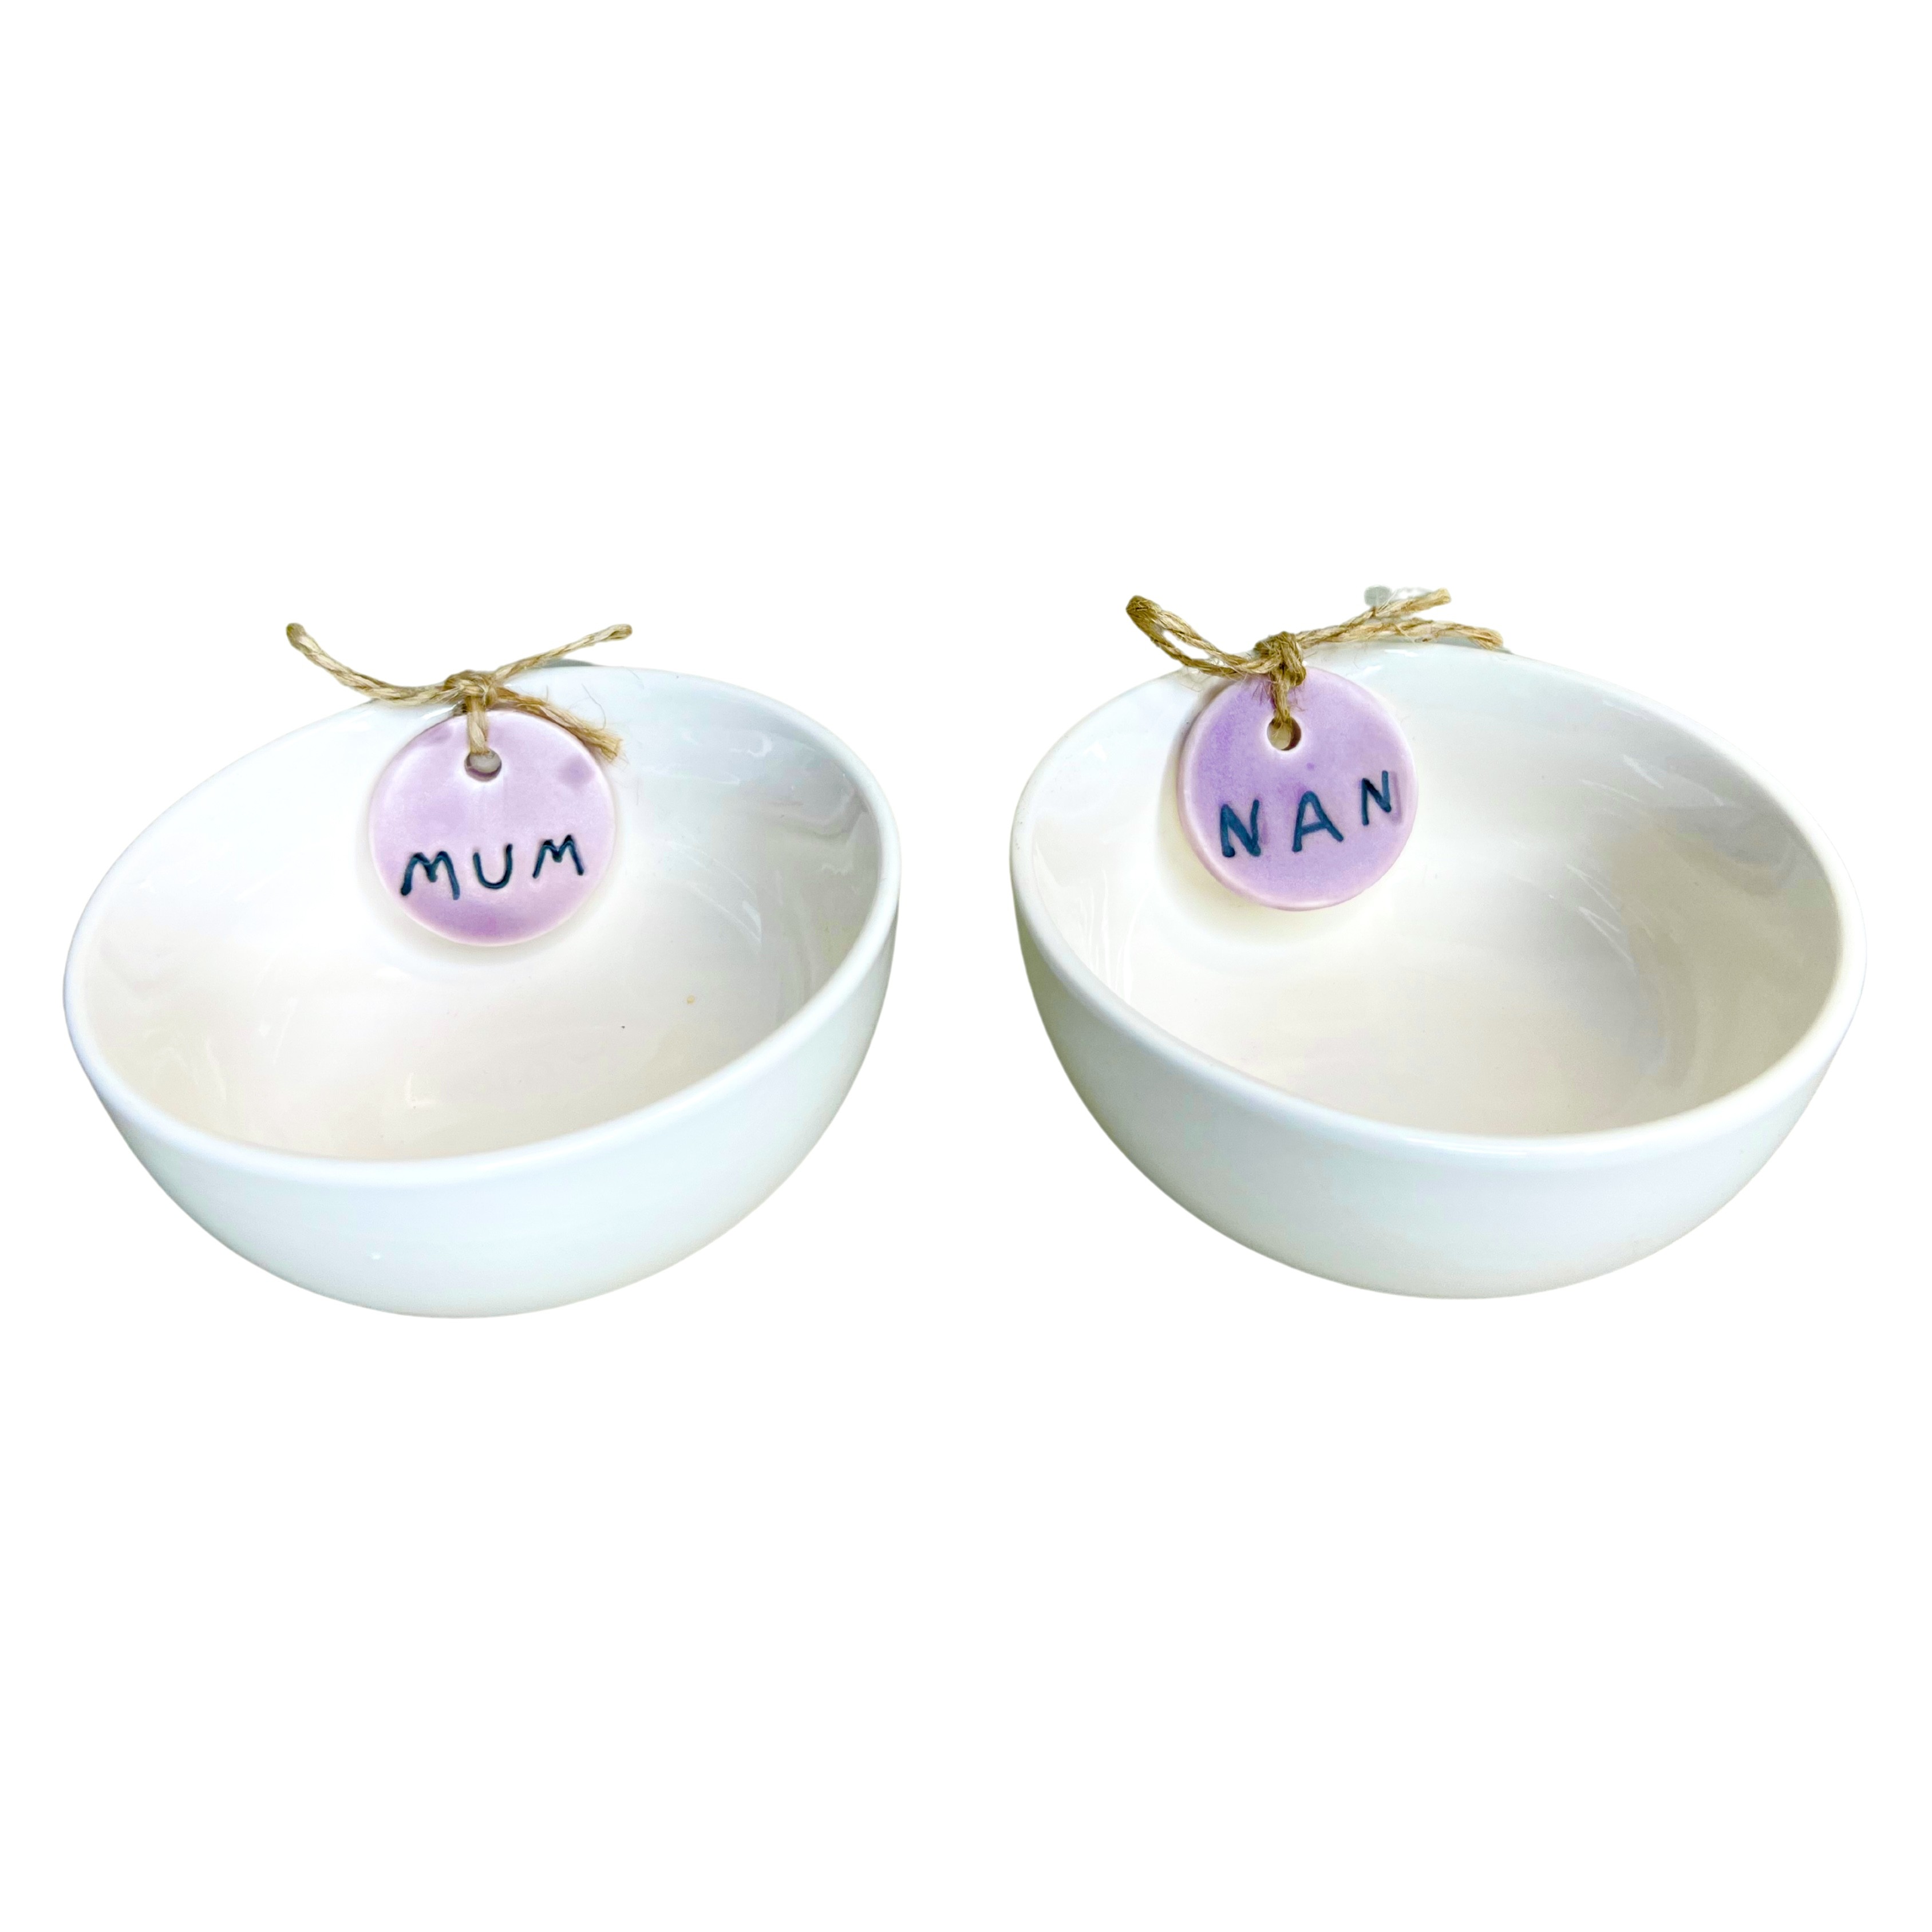 Ceramic Trinket Bowl - Mum or Nan